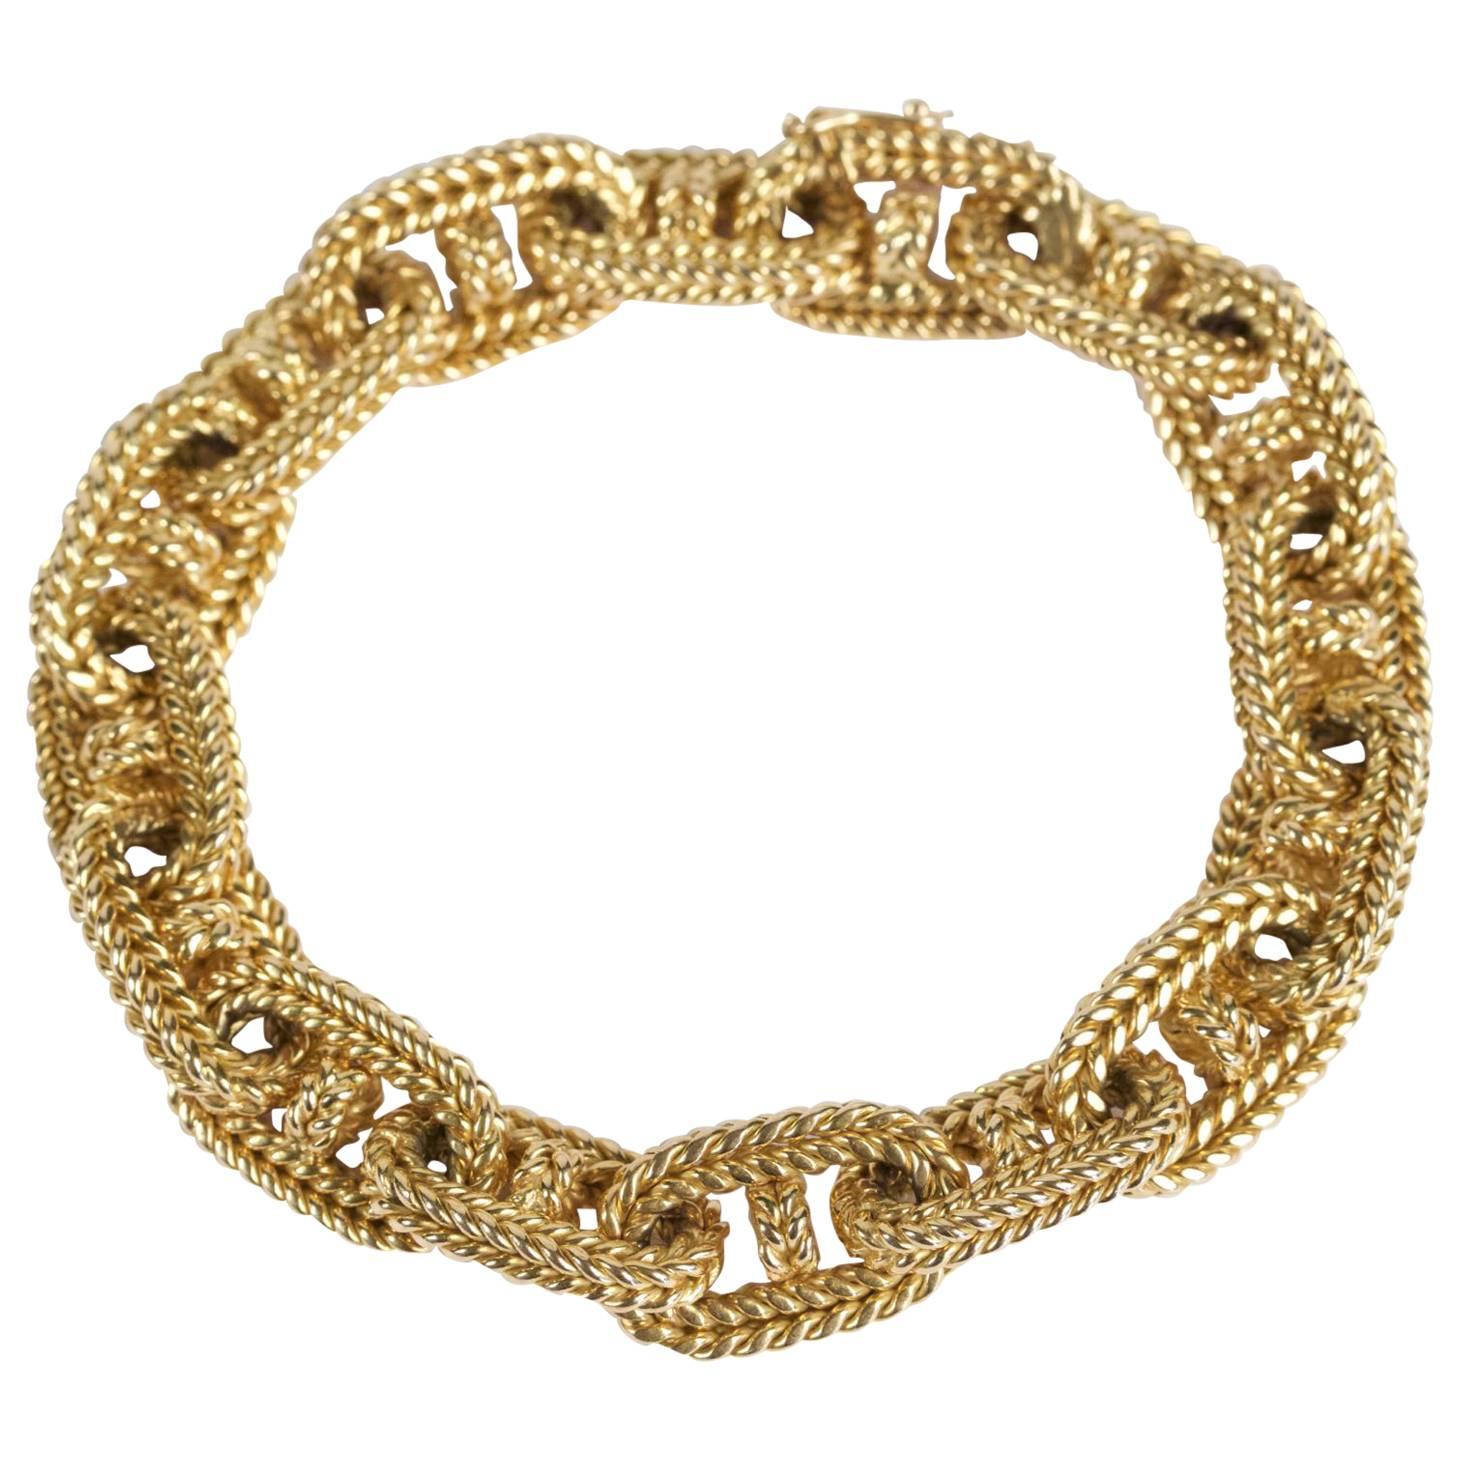 1960s Gold Chain Link Bracelet